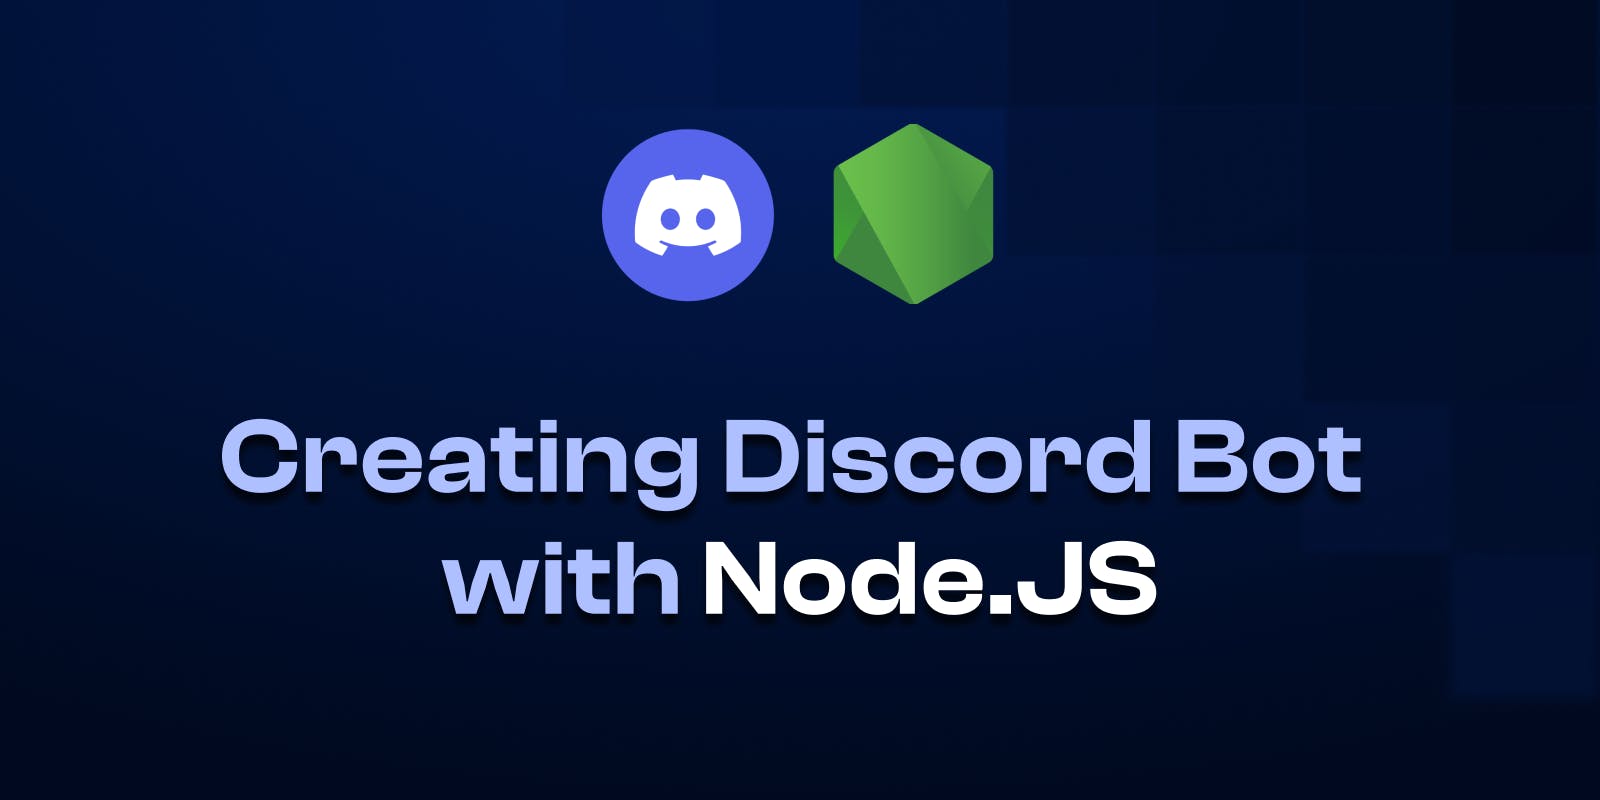 Build a Discord bot with Node.js